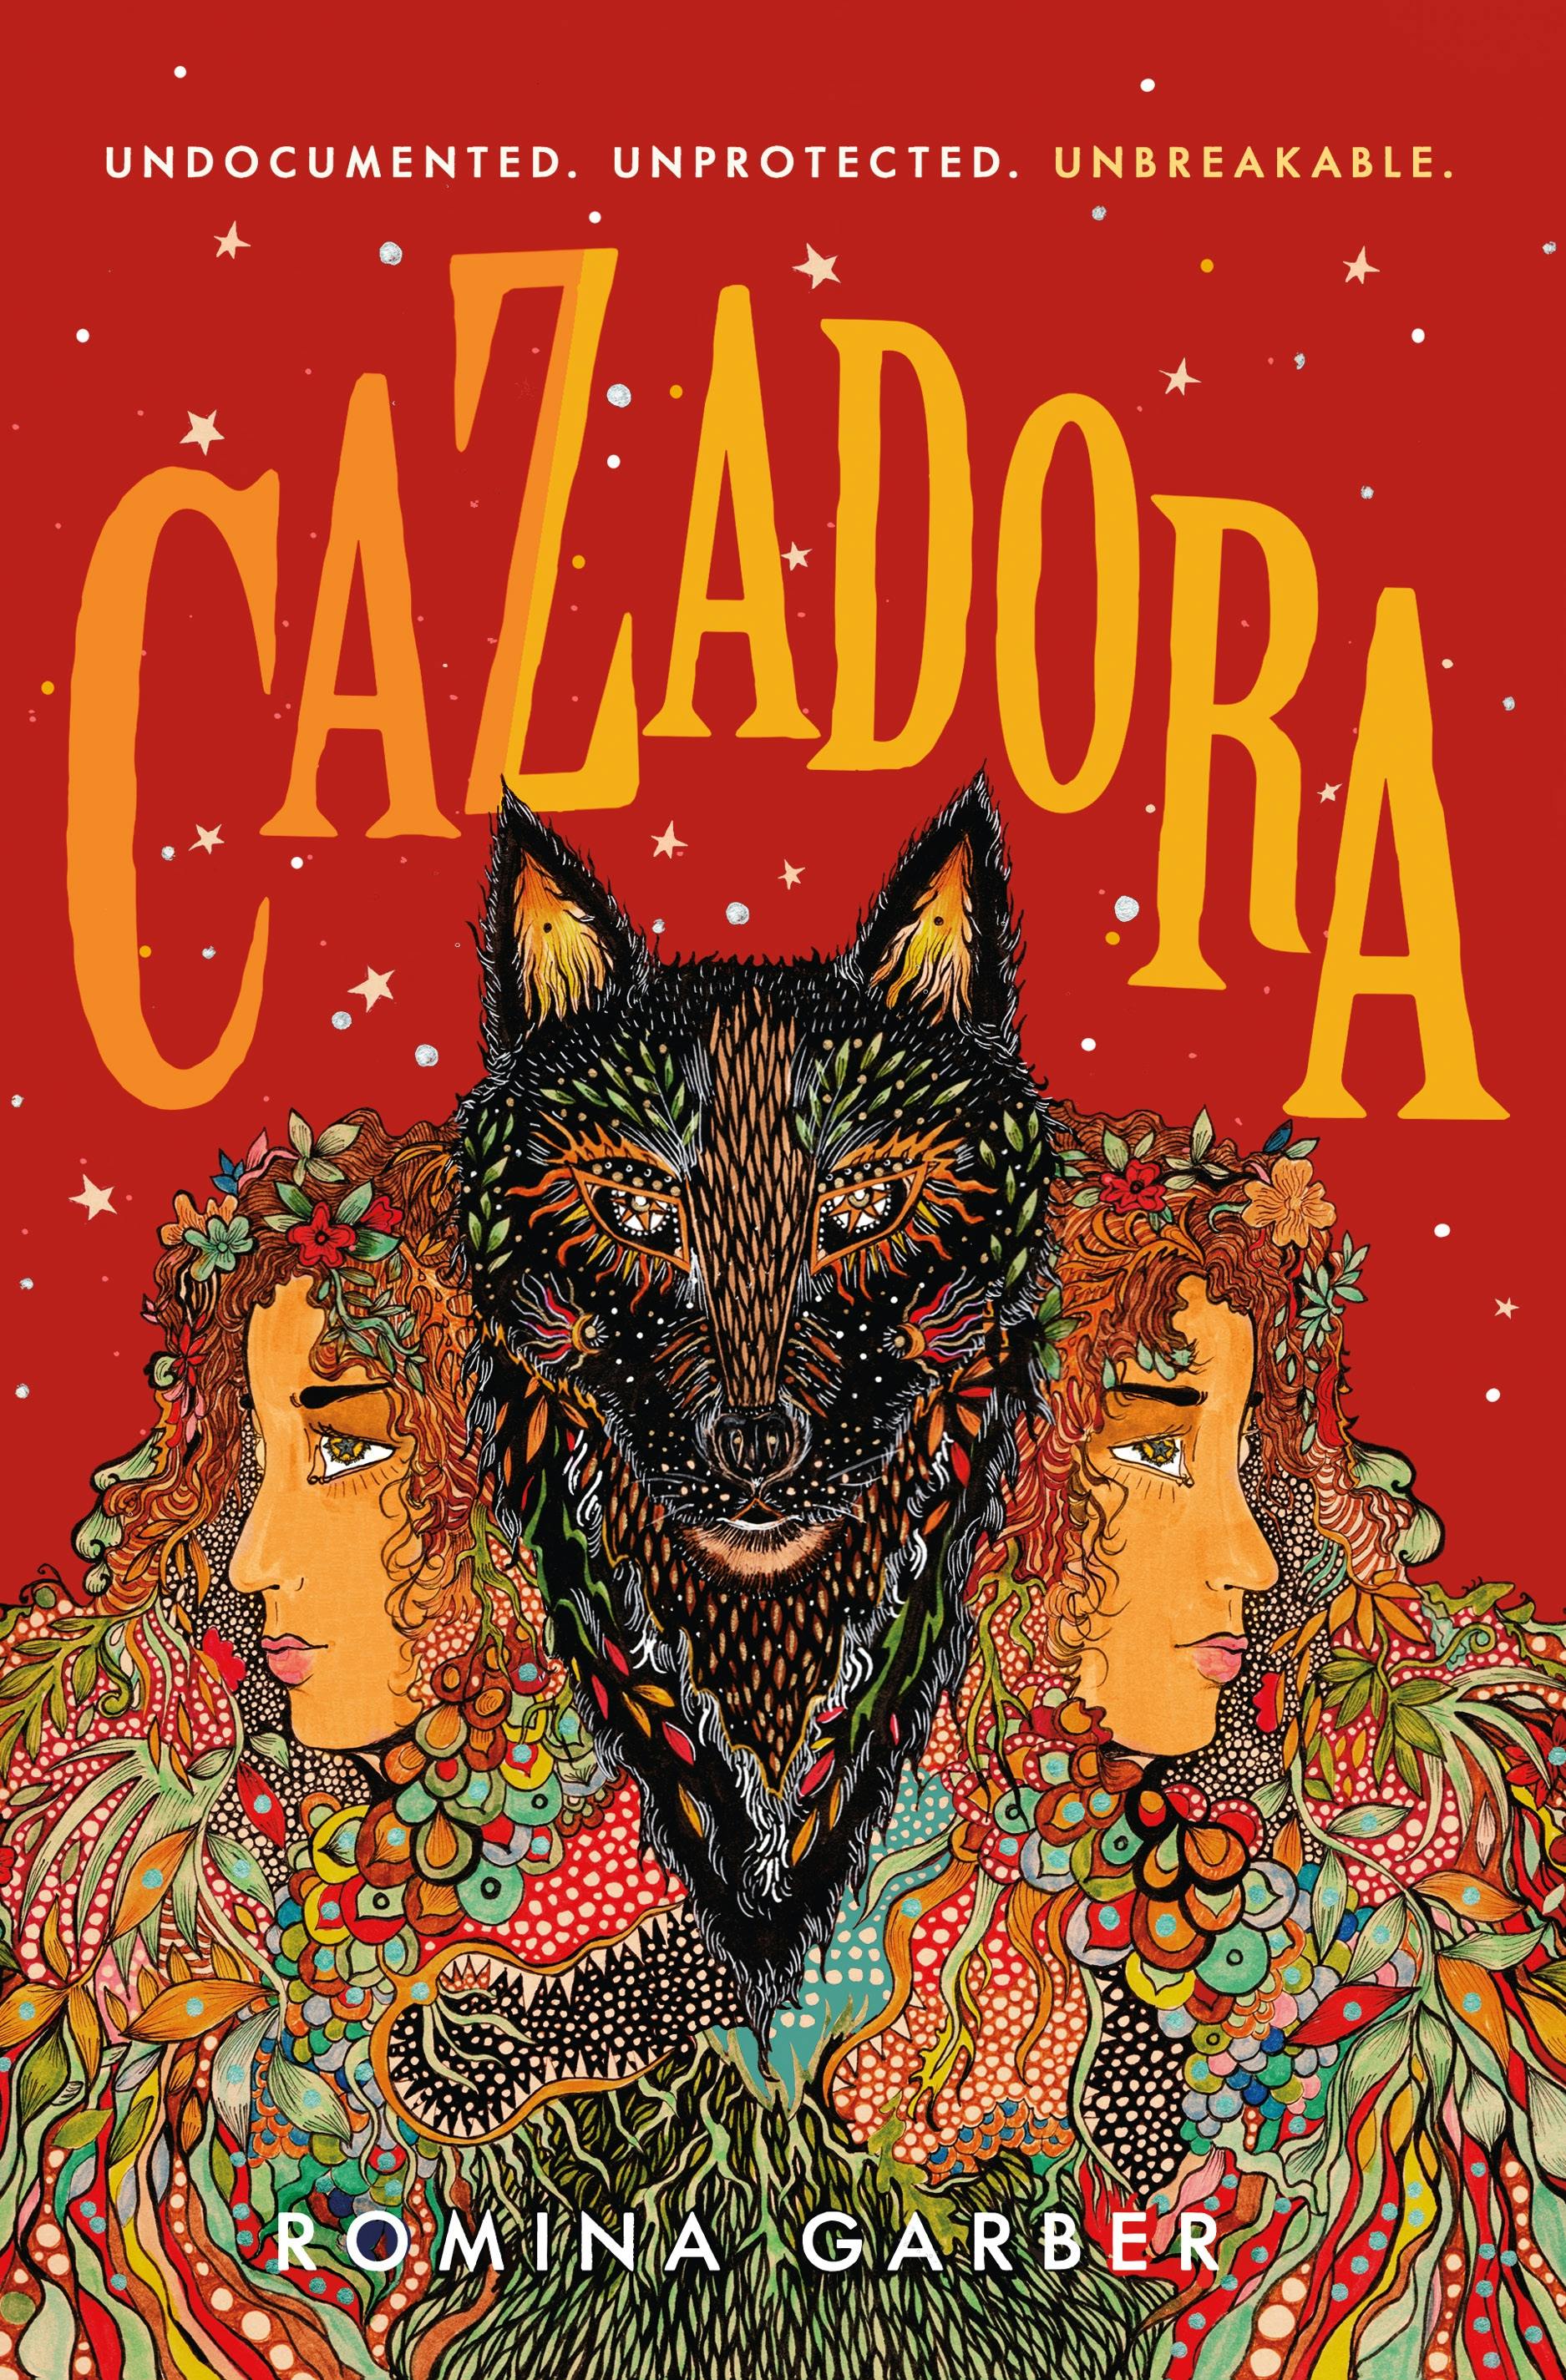 Image of Cazadora